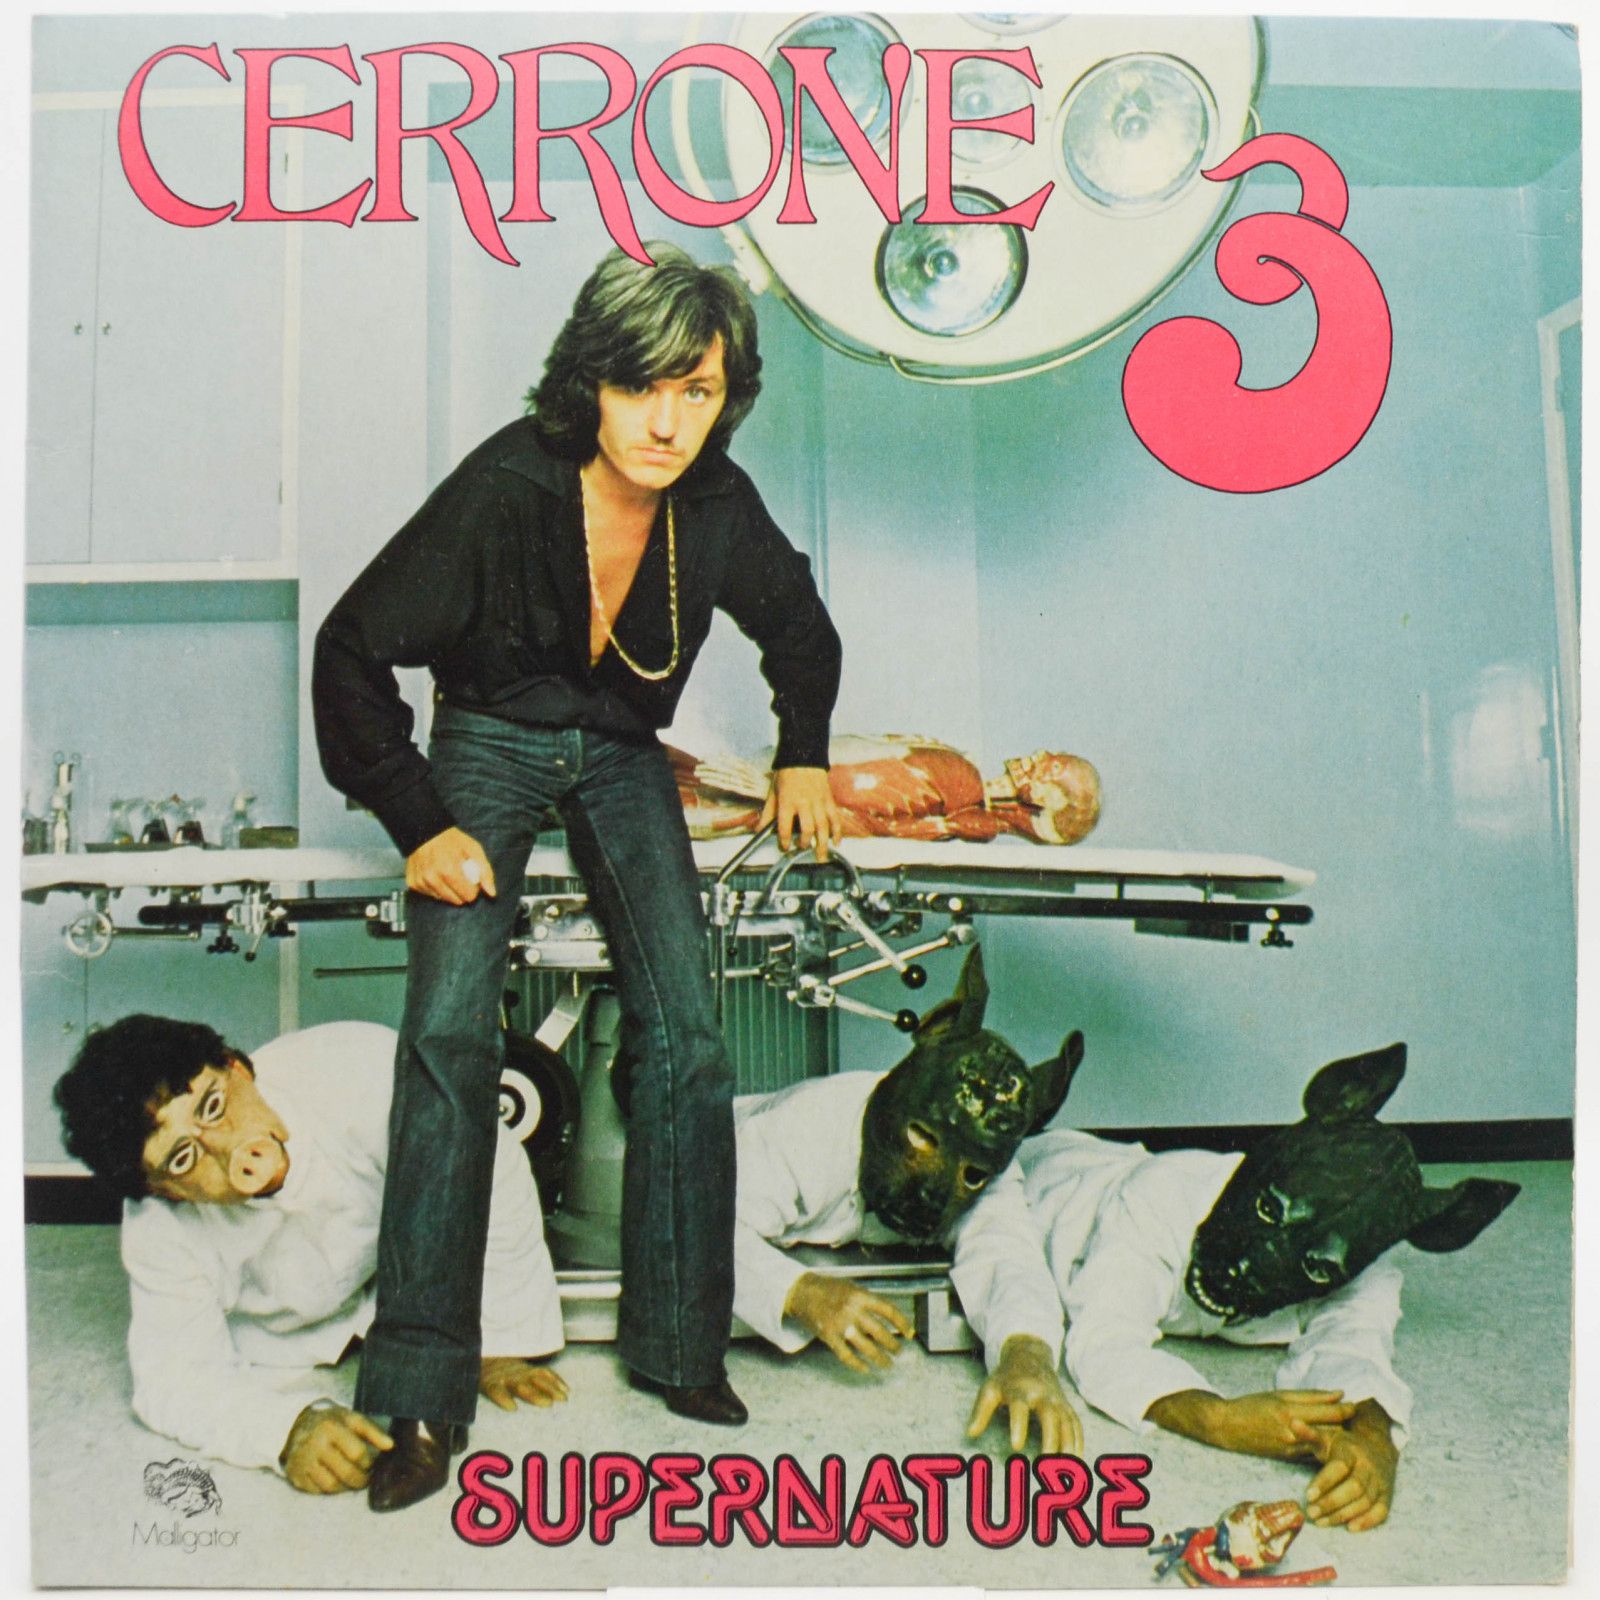 Cerrone — Cerrone 3 (Supernature) (1-st, France), 1977